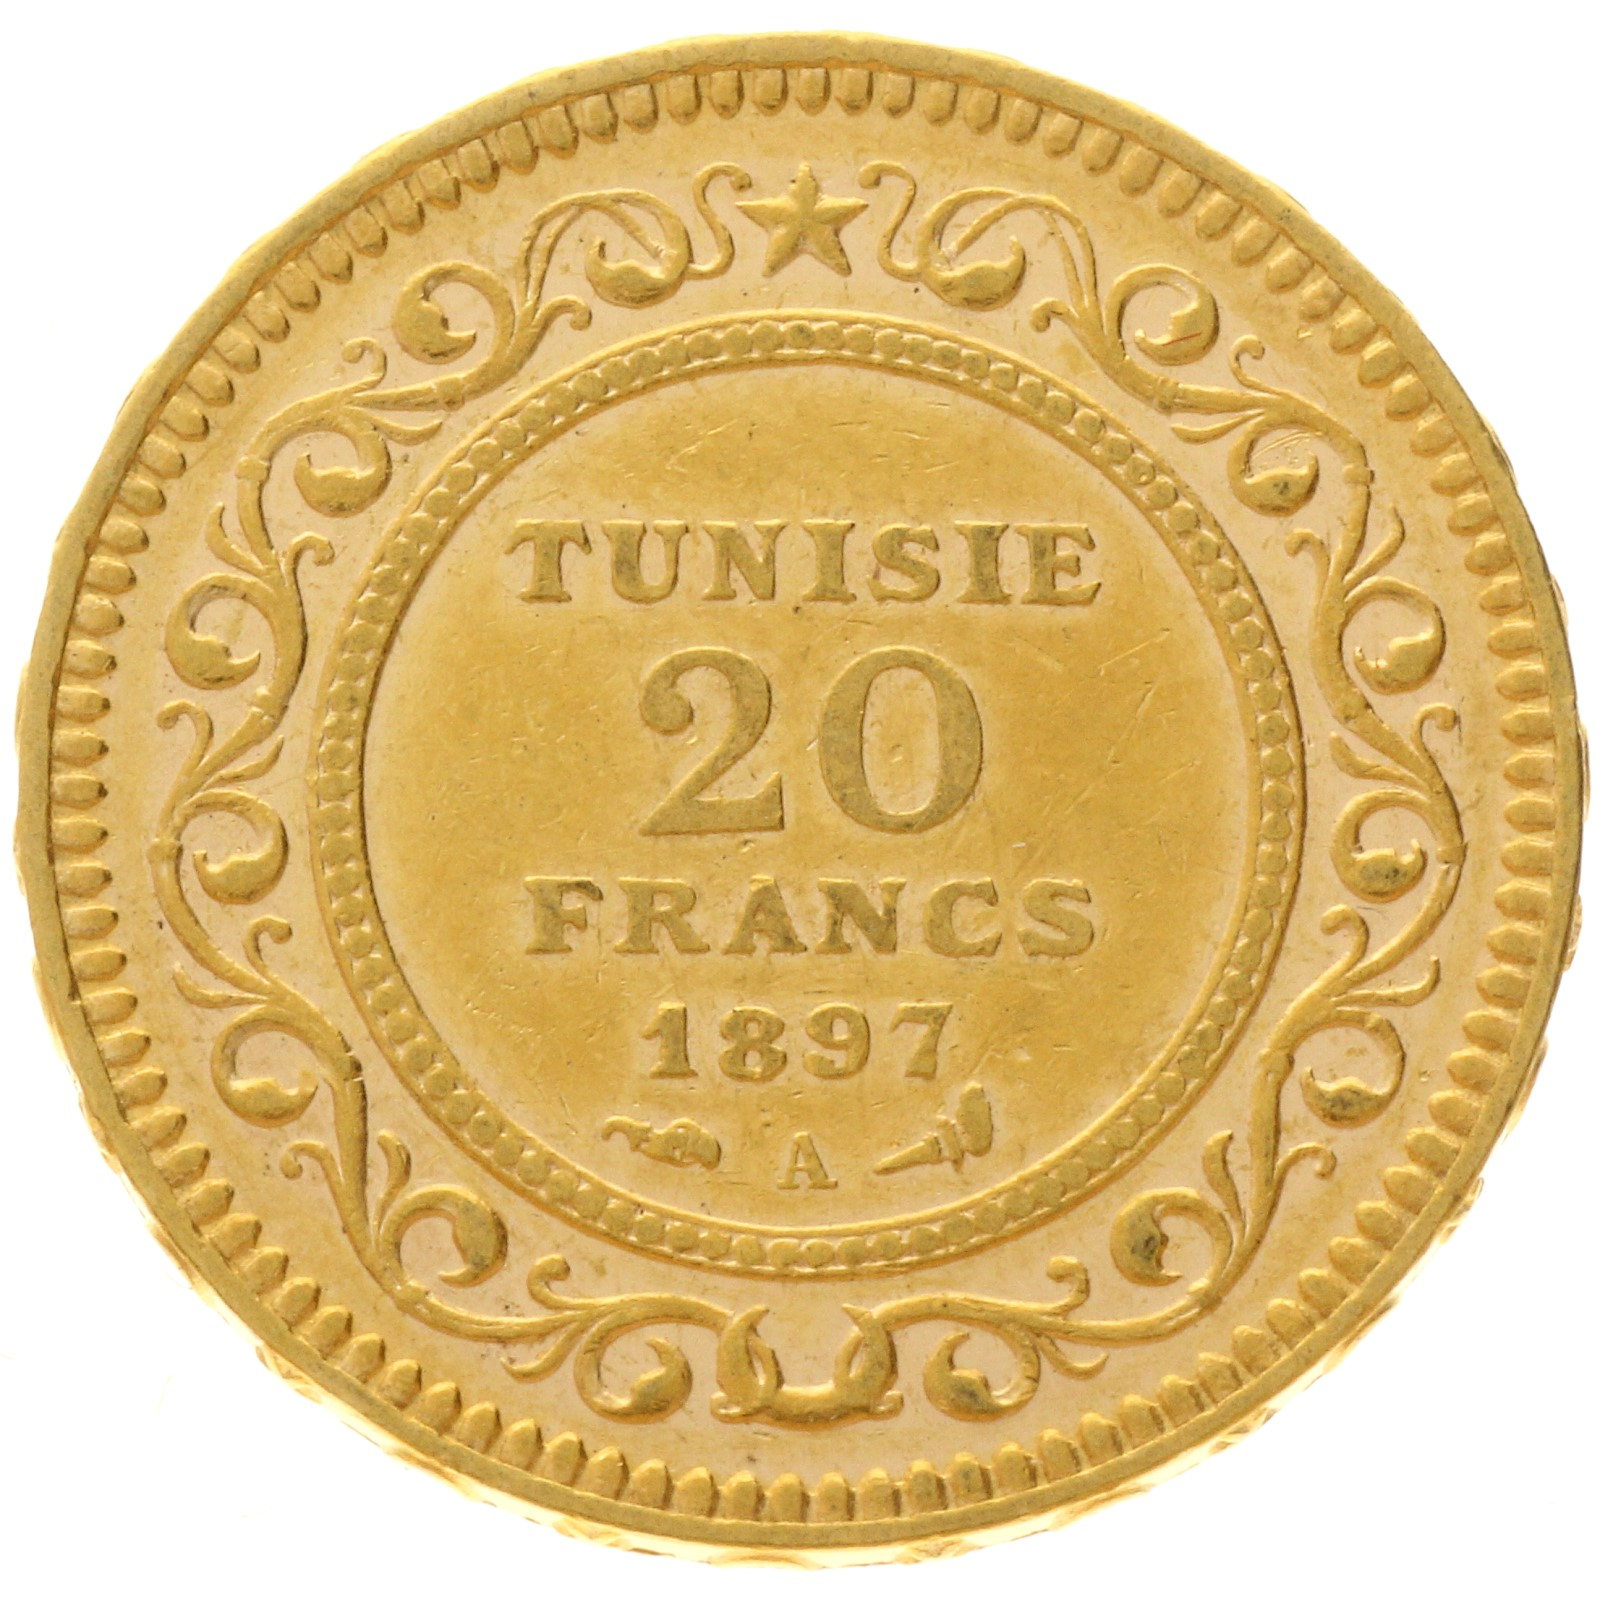 Tunisia - 20 francs - 1897 - A - Ali Bey